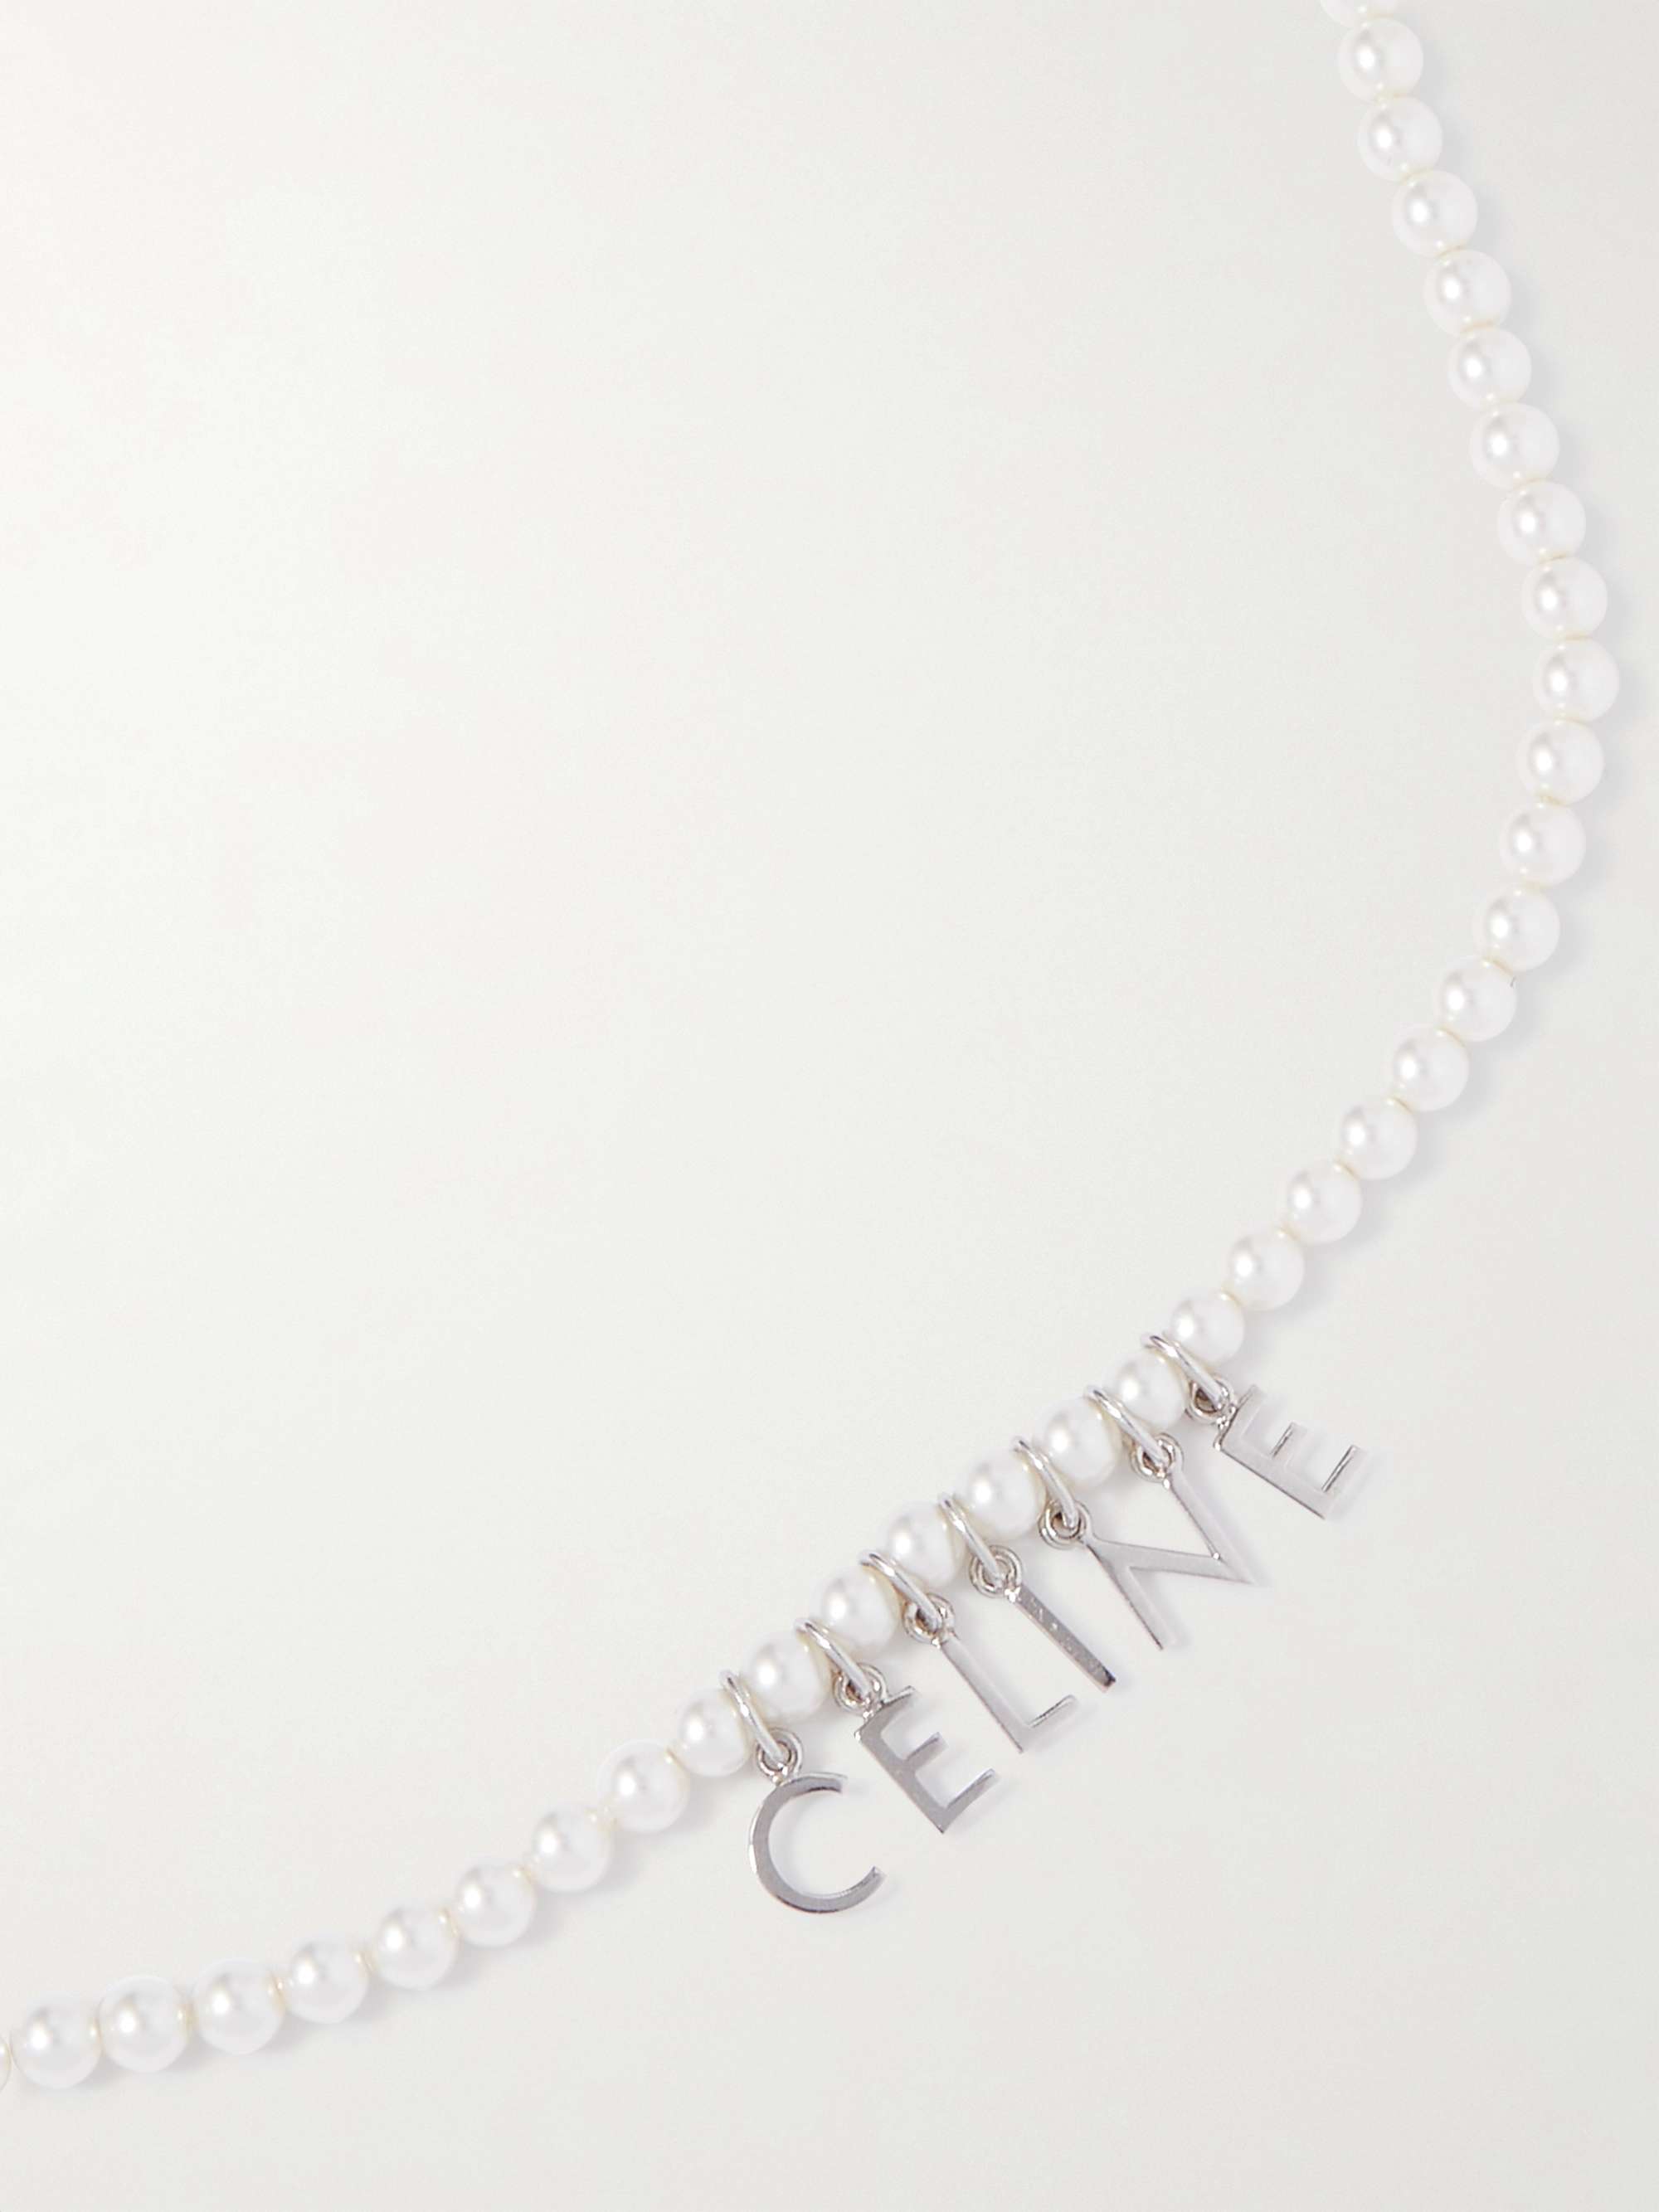 CELINE HOMME Silver-Tone Faux Pearl Necklace